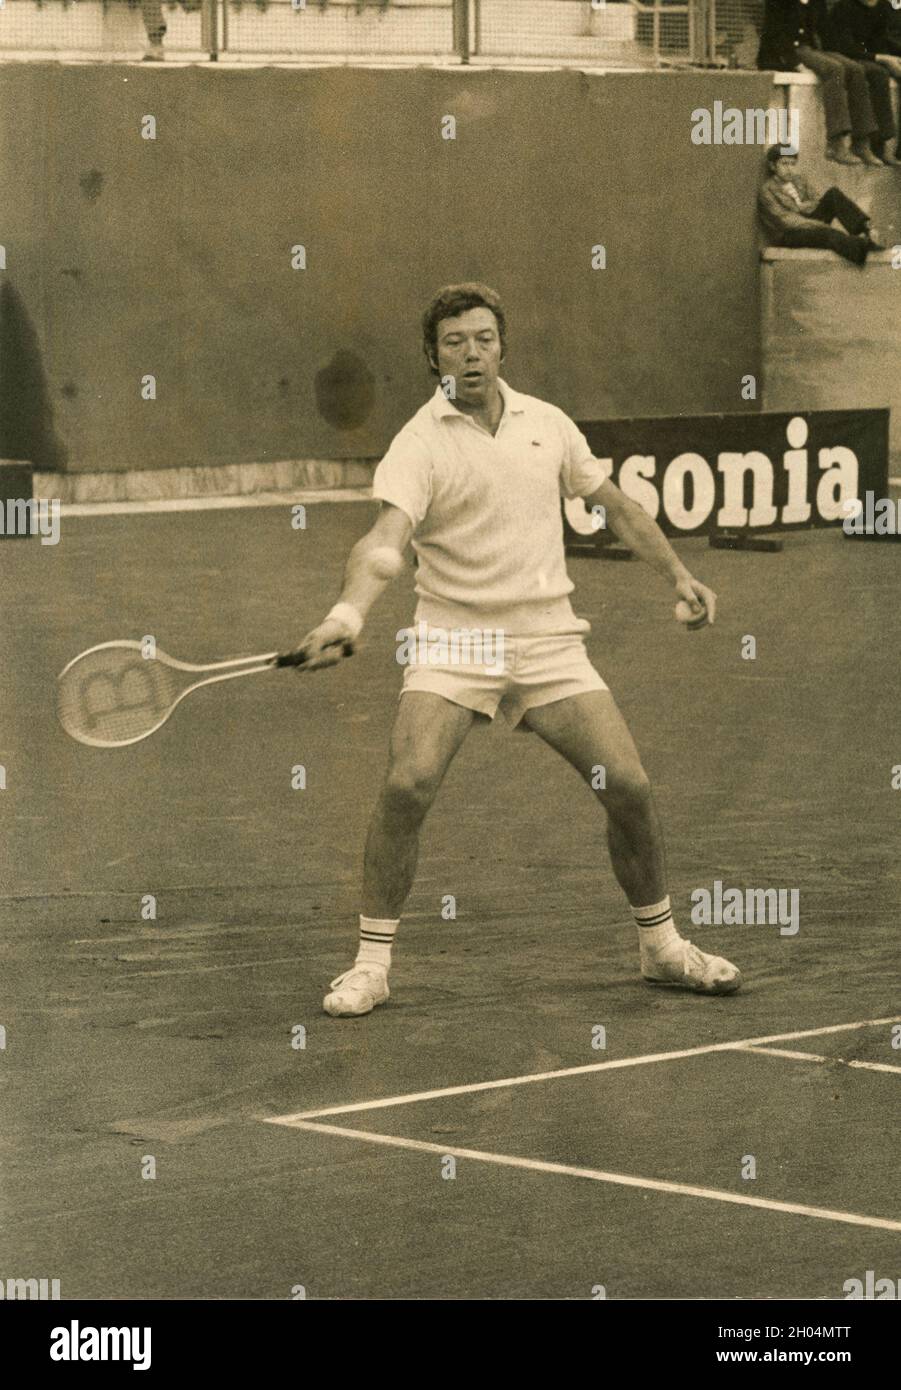 Pietrangeli tennis hi-res stock photography and images - Alamy